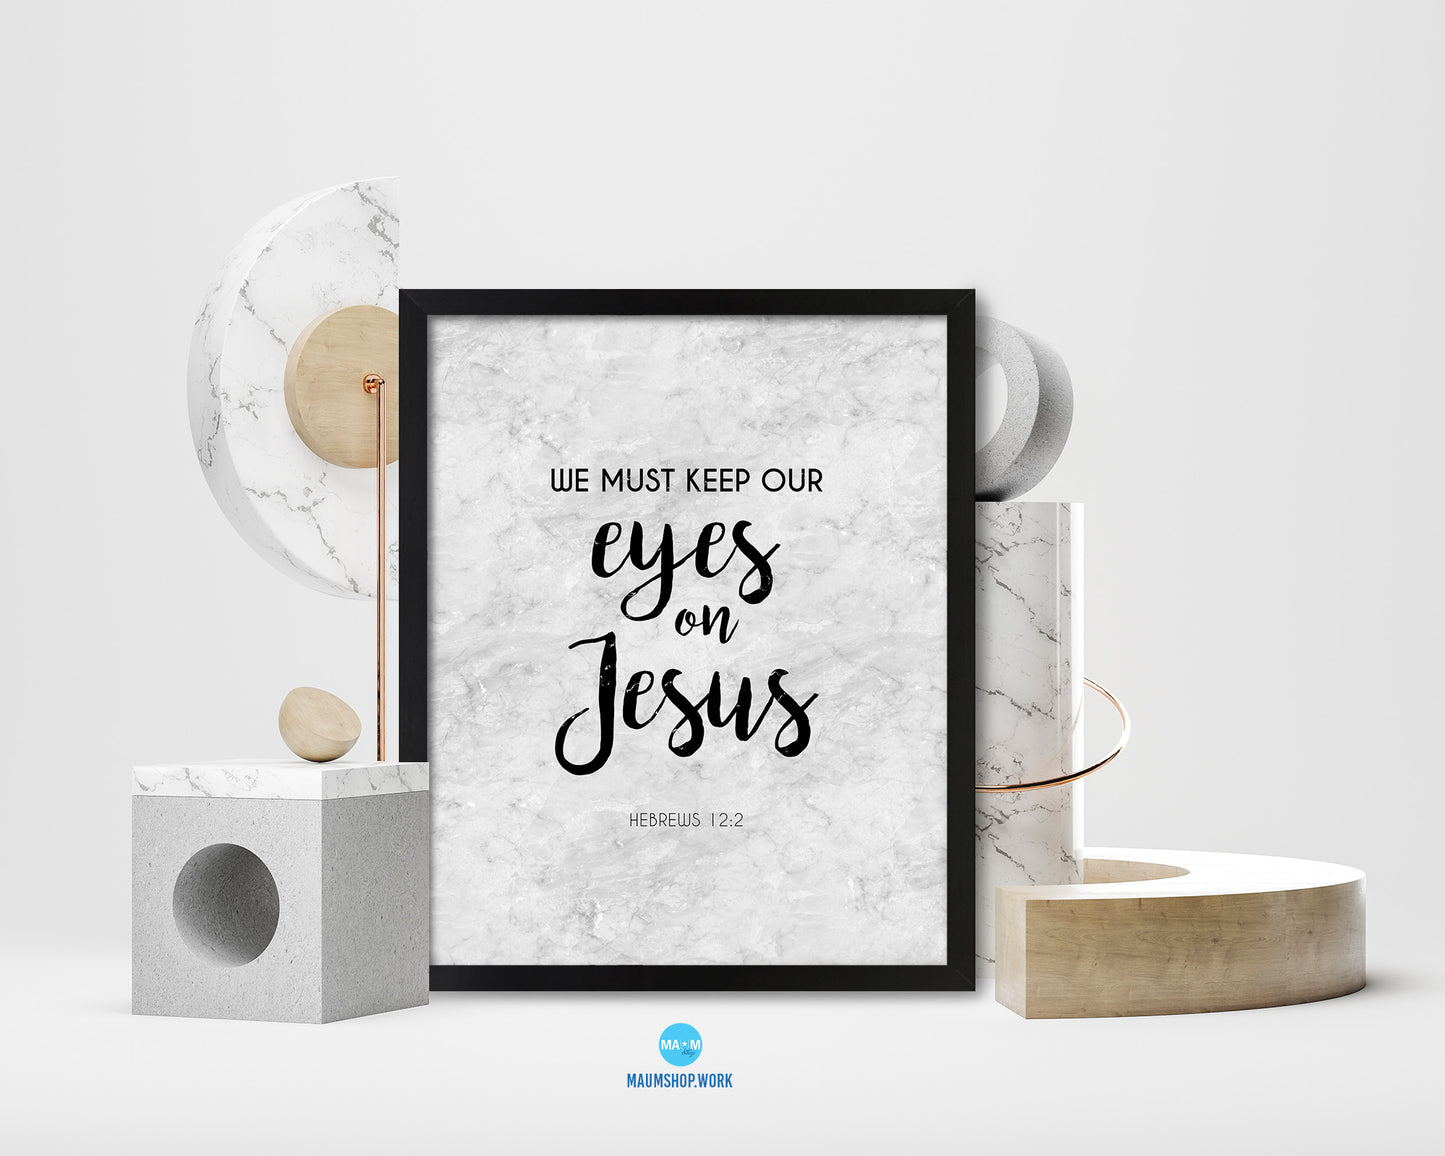 We must keep our eyes on Jesus, Hebrews 12:2 Bible Scripture Verse Framed Print Wall Art Decor Gifts